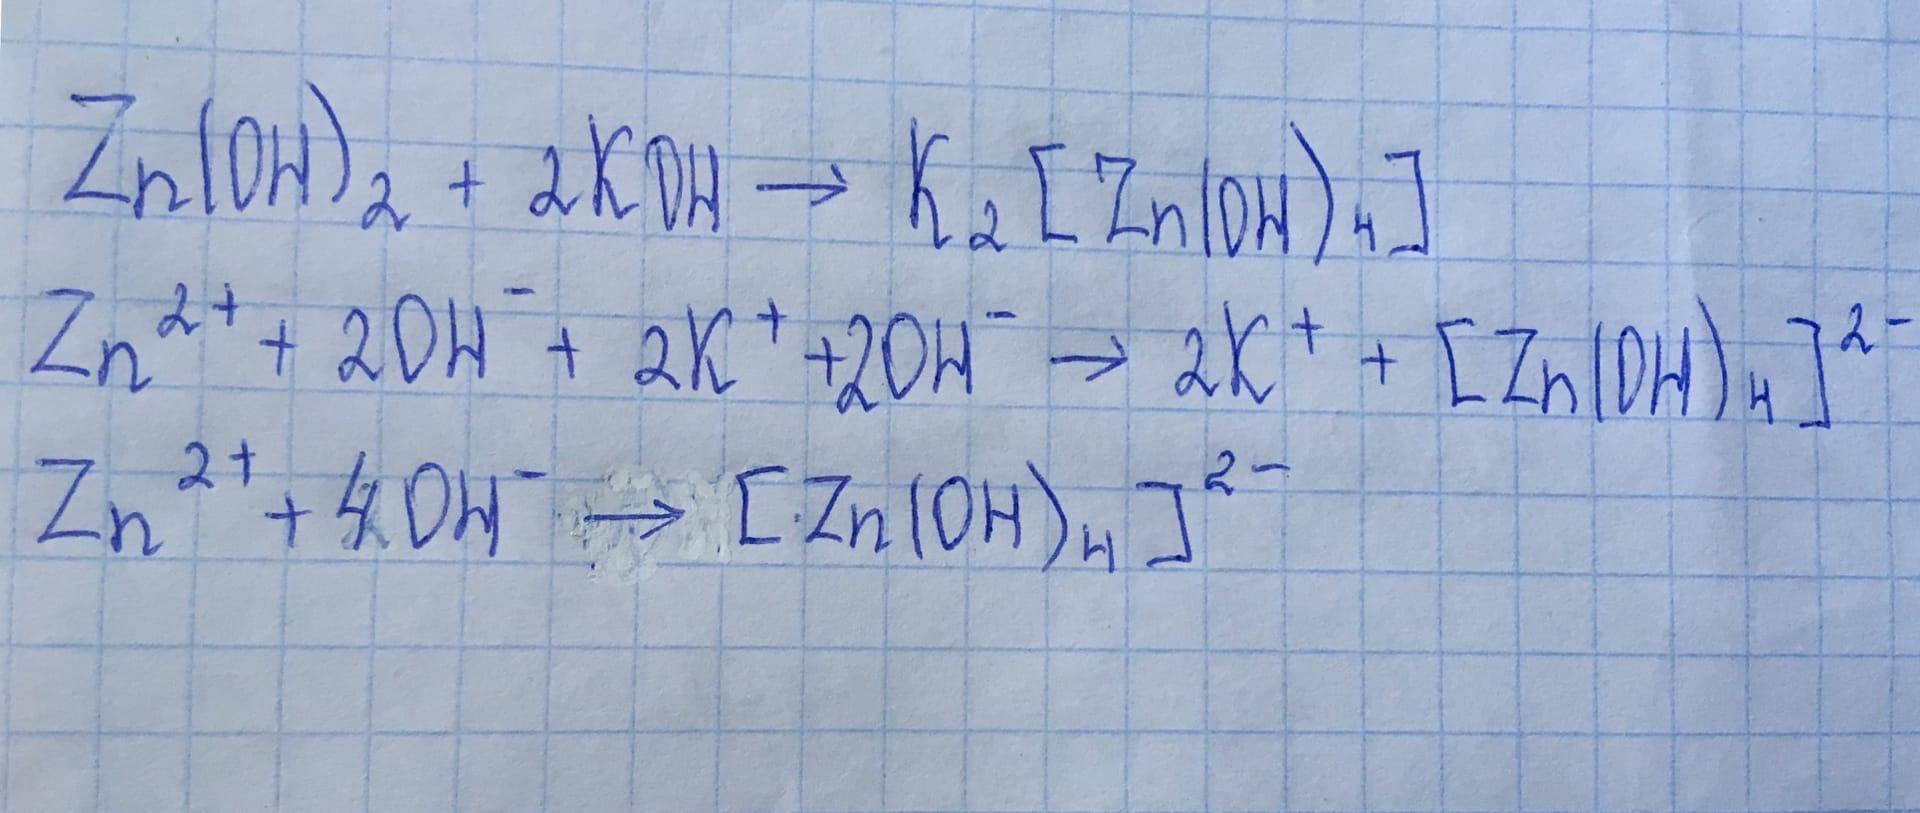 K zn oh 4. ZN Oh 2 реакции. ZN Oh 2 уравнение реакции. ZN сокращенное ионное. ZN Oh 2 ионное уравнение.